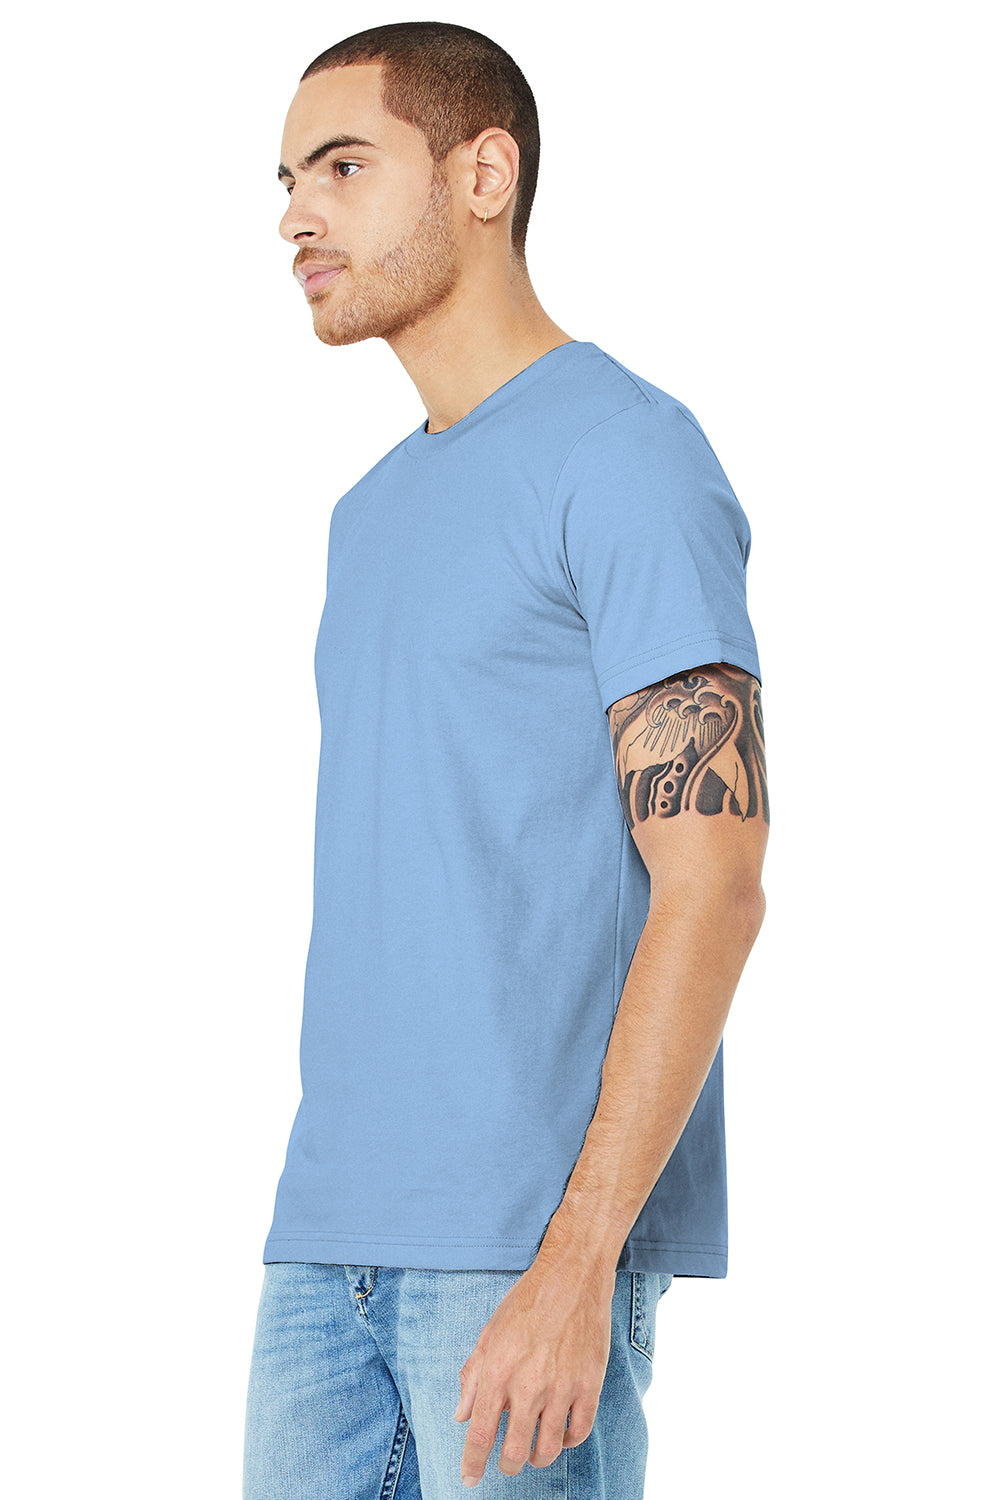 Bella + Canvas BC3001/3001C Mens Jersey Short Sleeve Crewneck T-Shirt Baby Blue Model 3Q